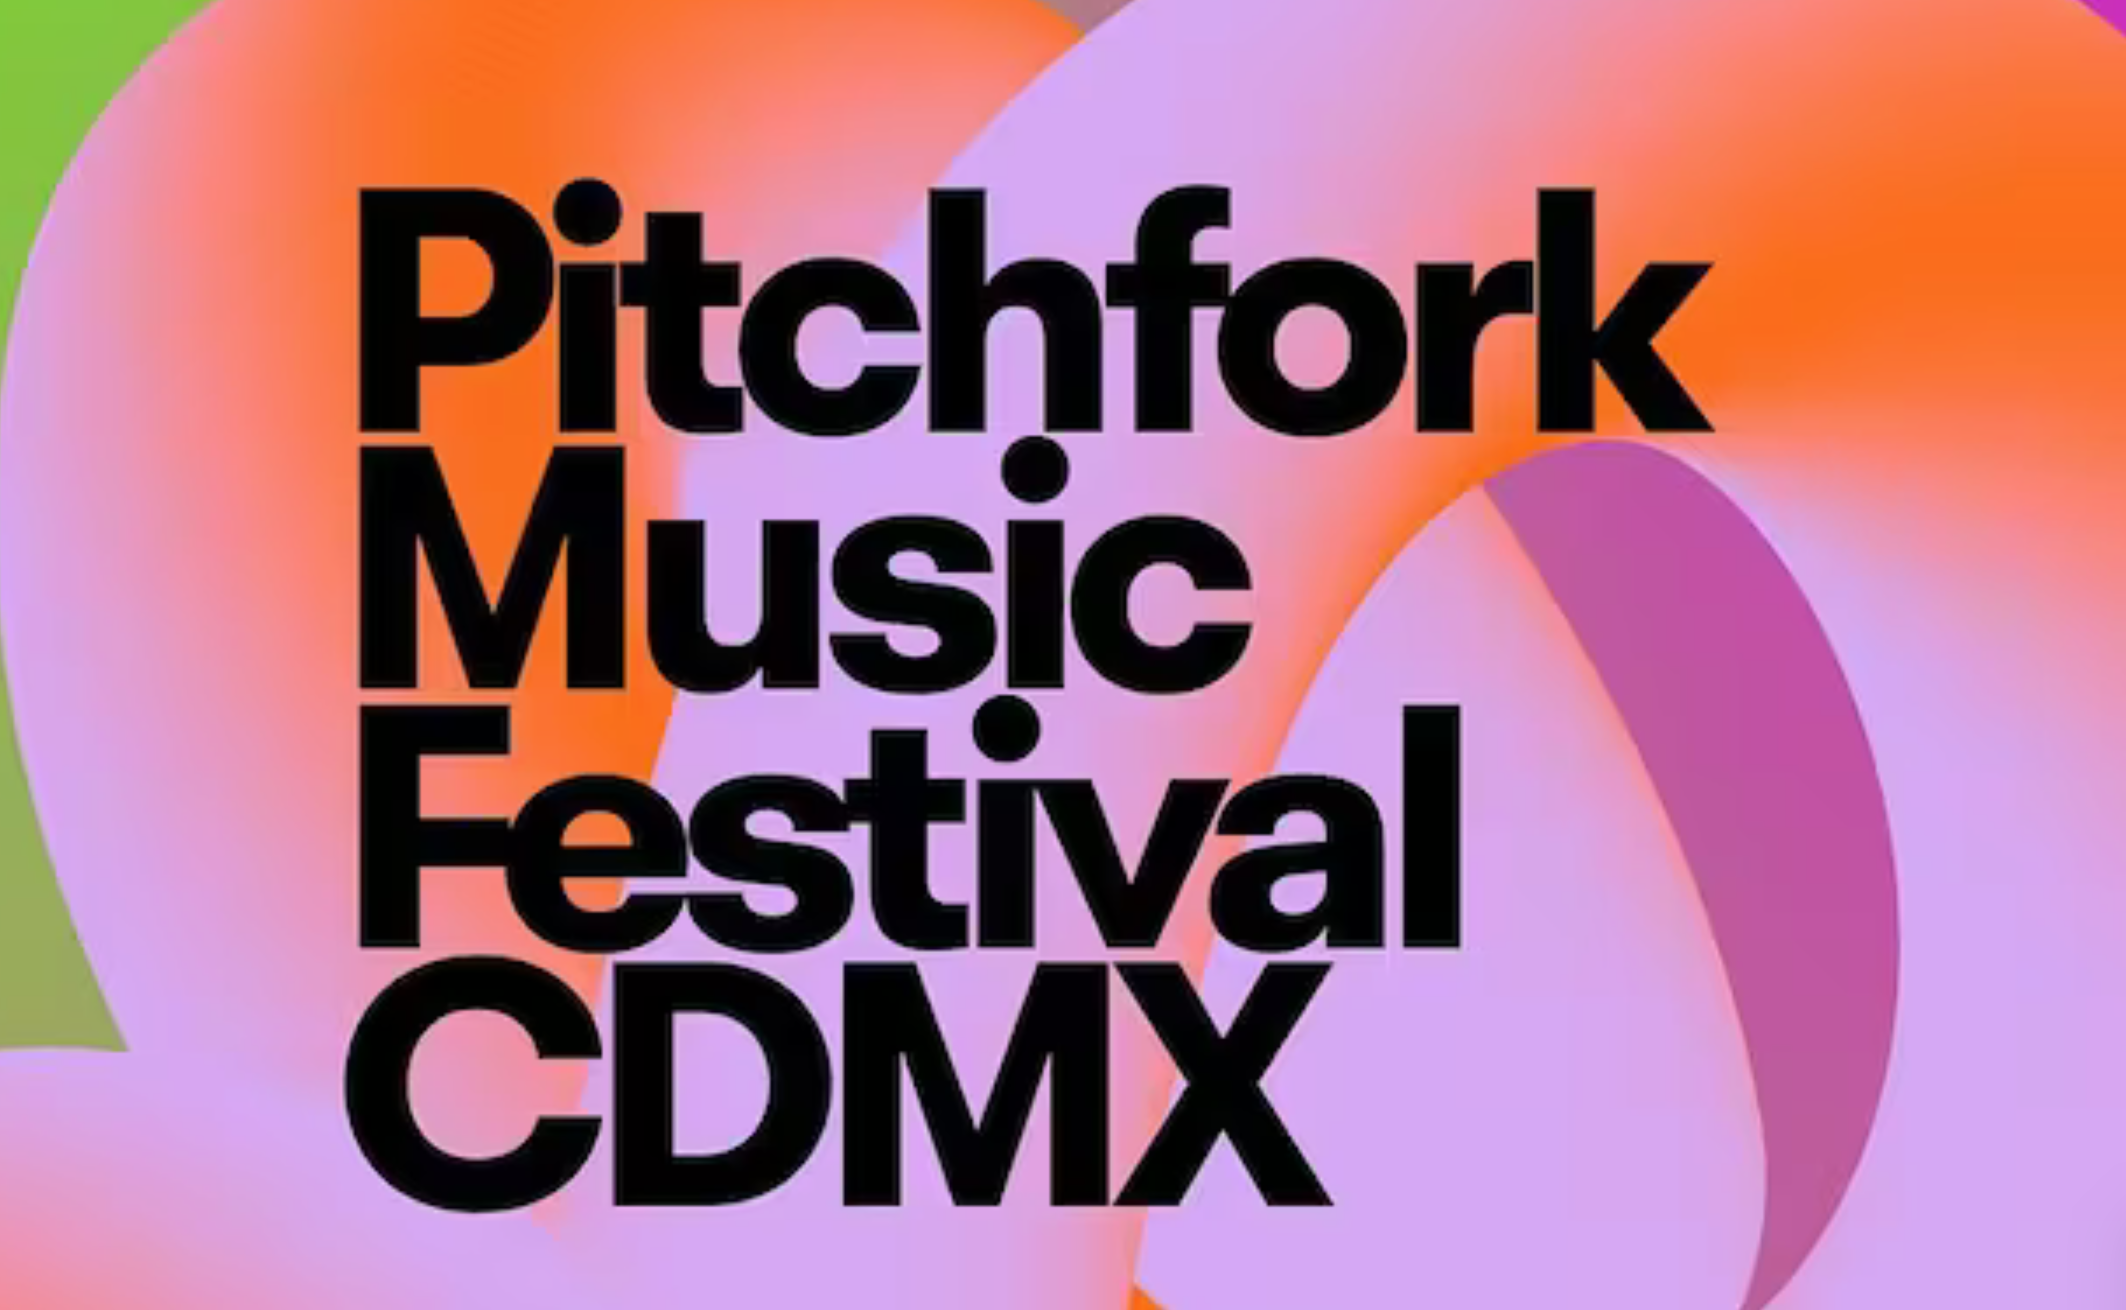 Pitchfork Music Festival CDMX del 6 al 10 de marzo